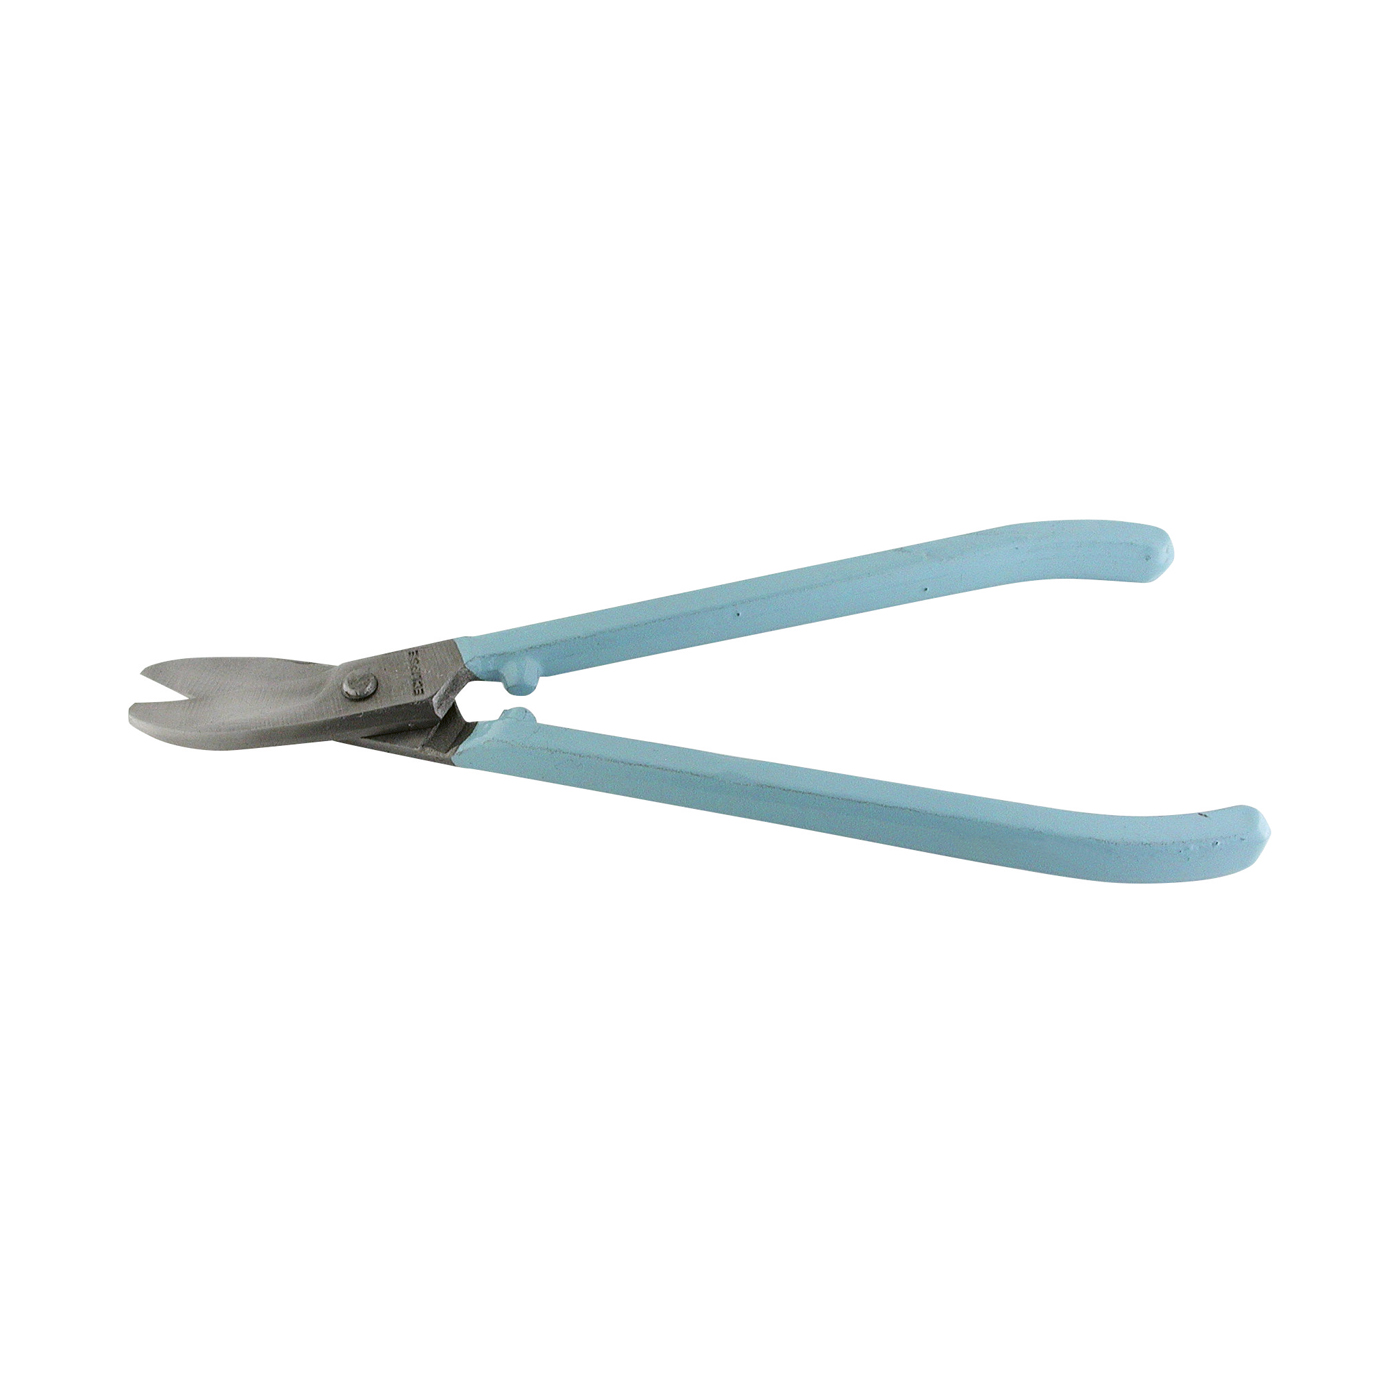 Juweller Scissors, 180 mm, Curved Edges - 1 piece